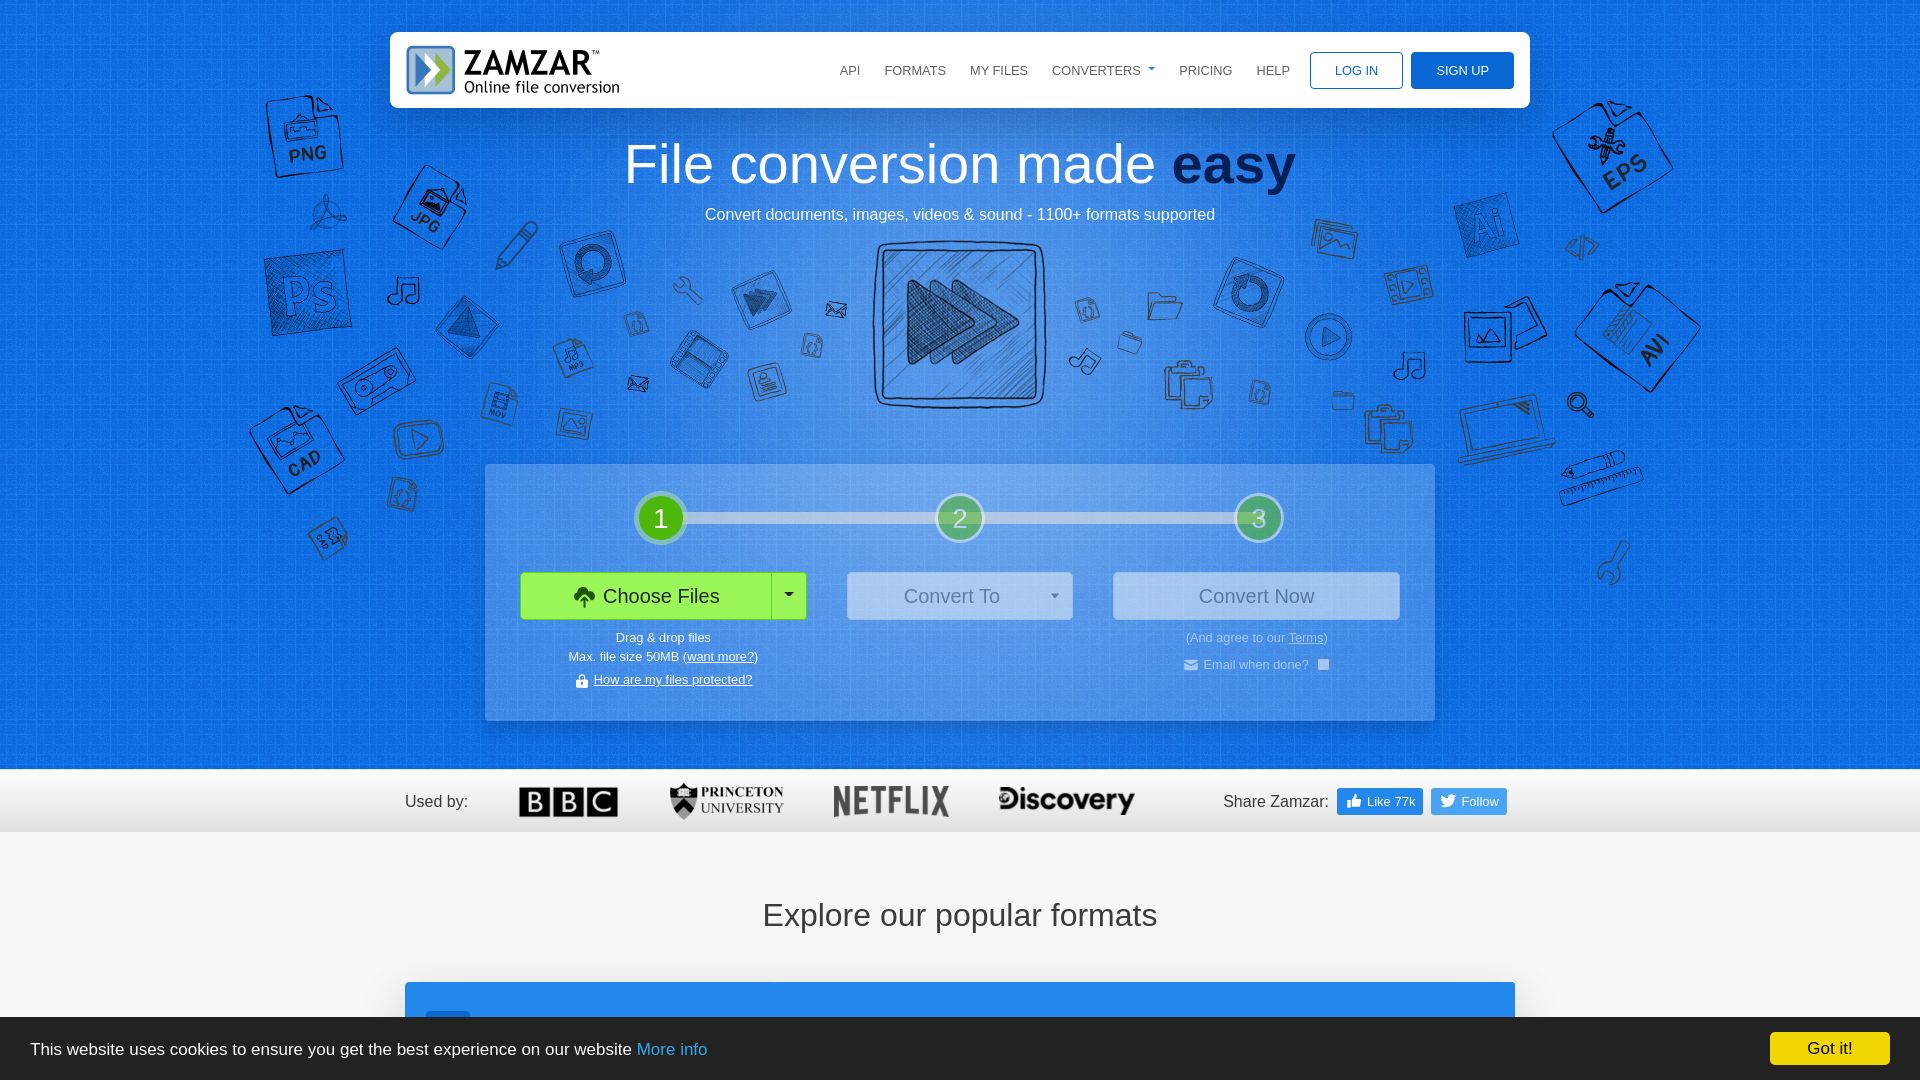 вебсайт zamzar.com Є   ONLINE